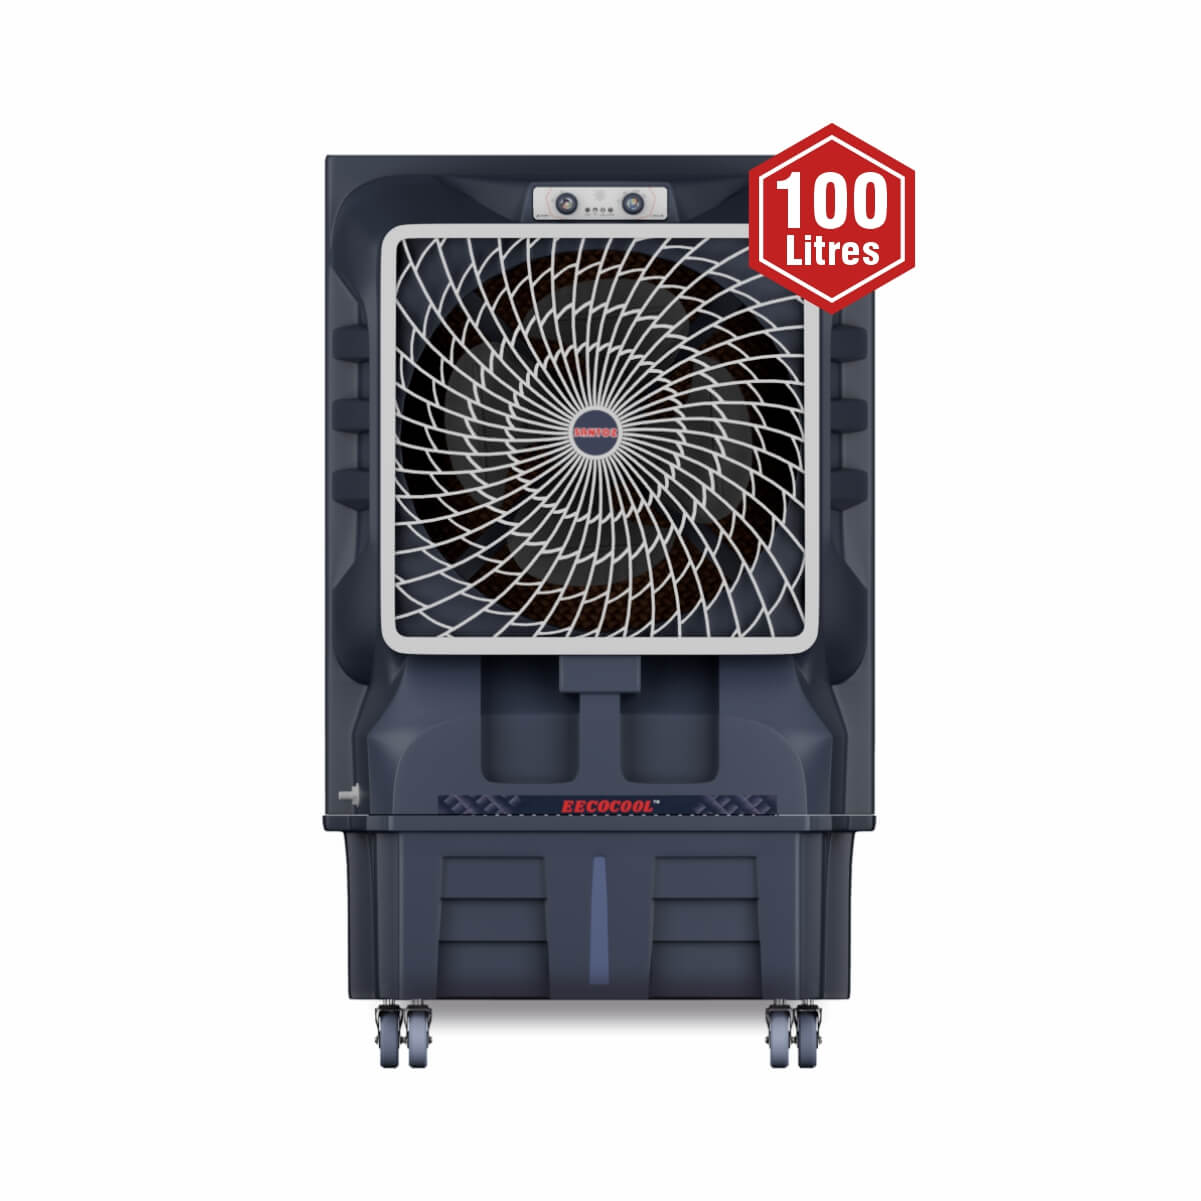 Eecocool Santoz 100 Litre Desert Air Cooler